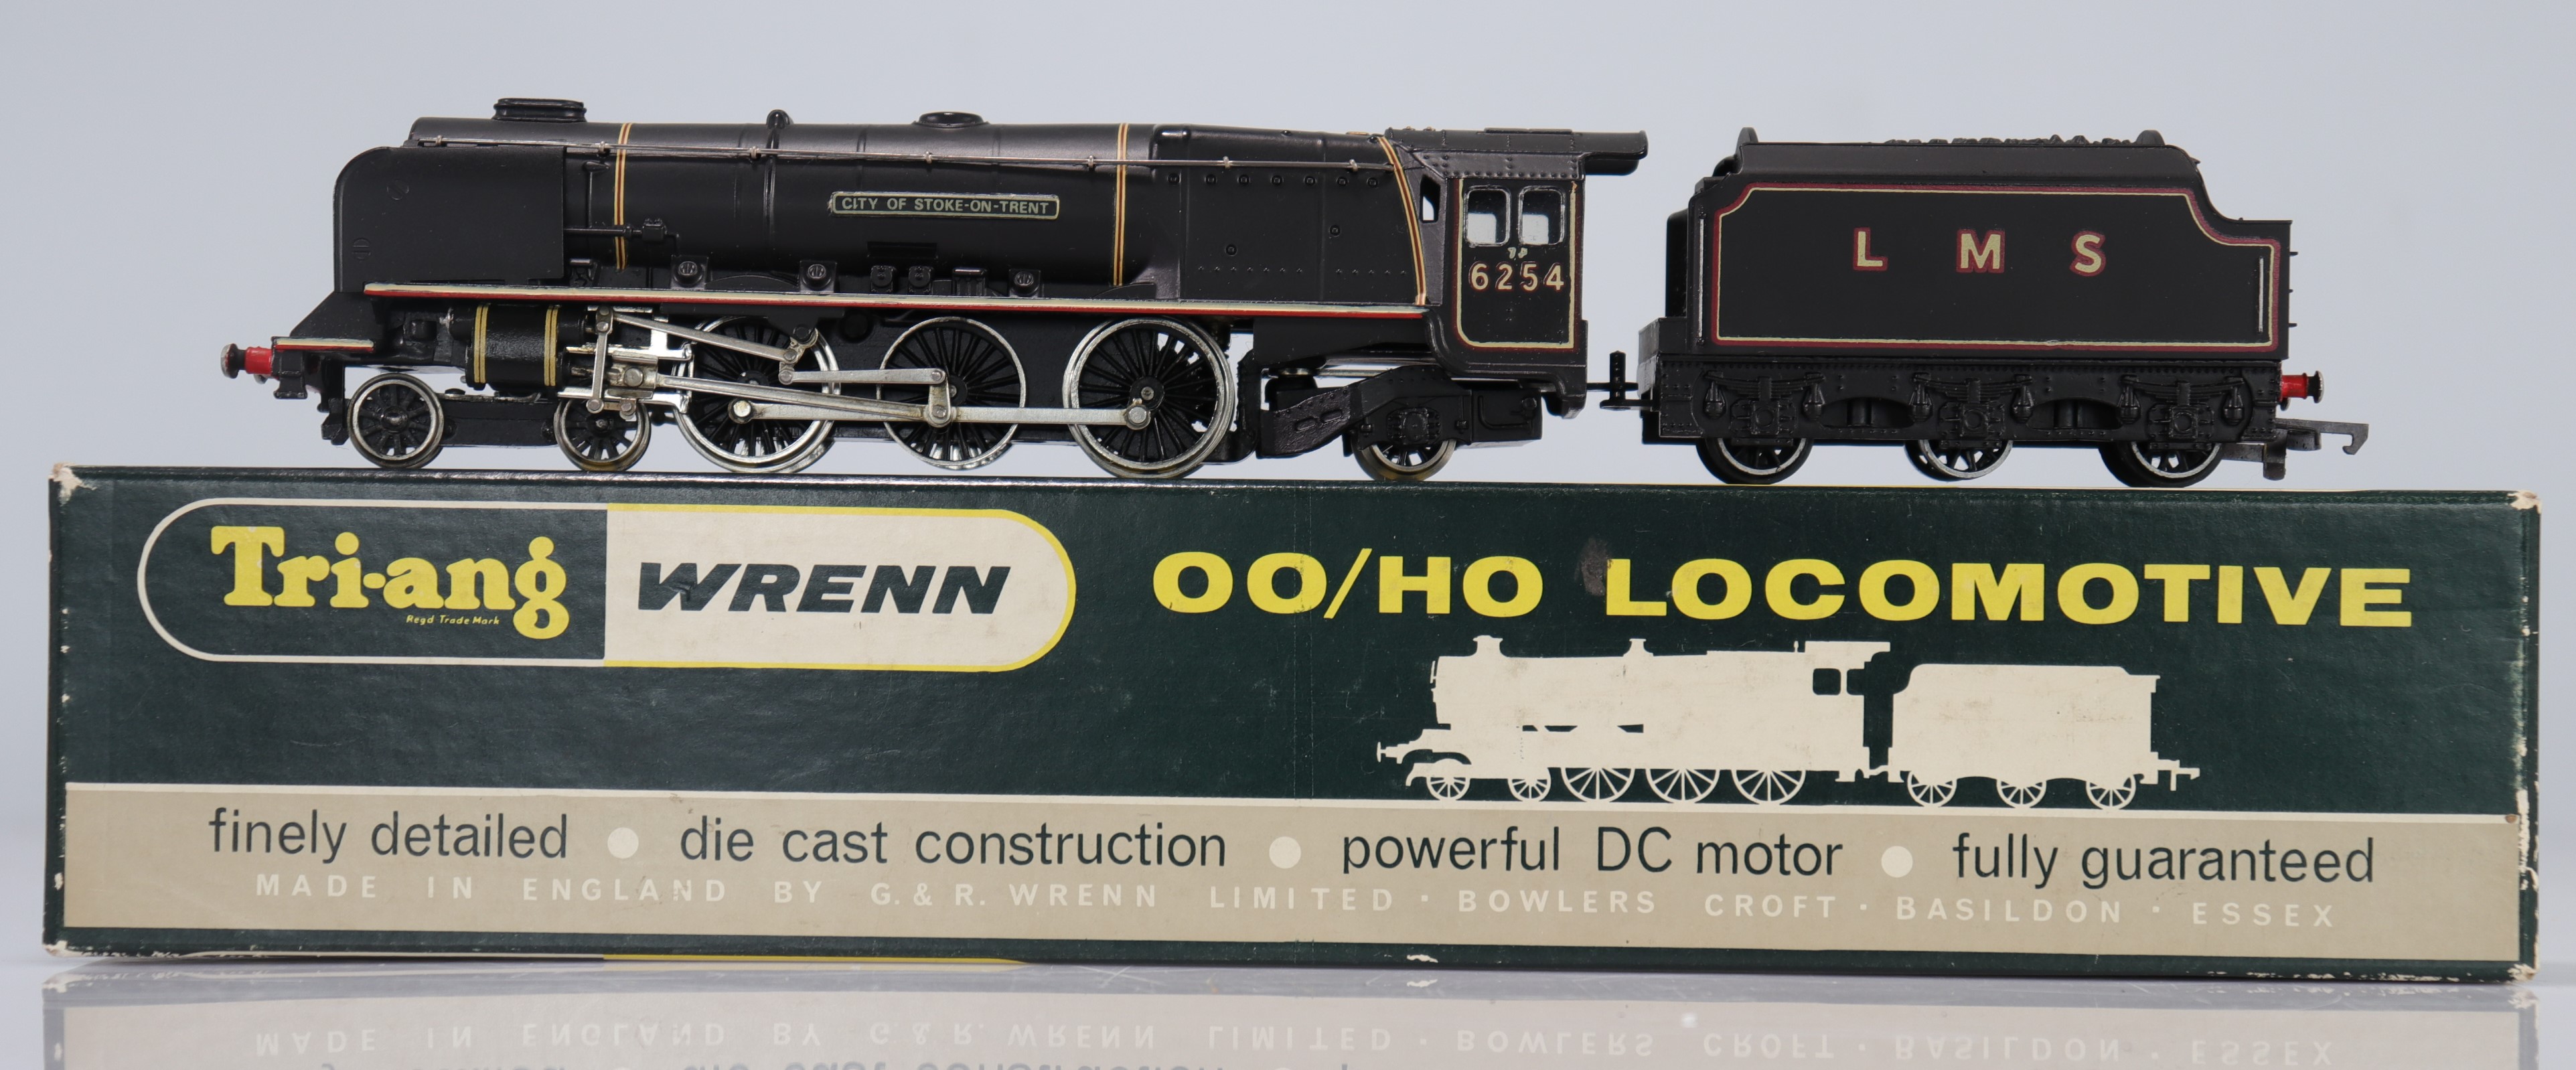 Locomotive Wrenn / Reference: W2227 / 6254 / Type: 4.6.2 City of Stoke-on-Trent